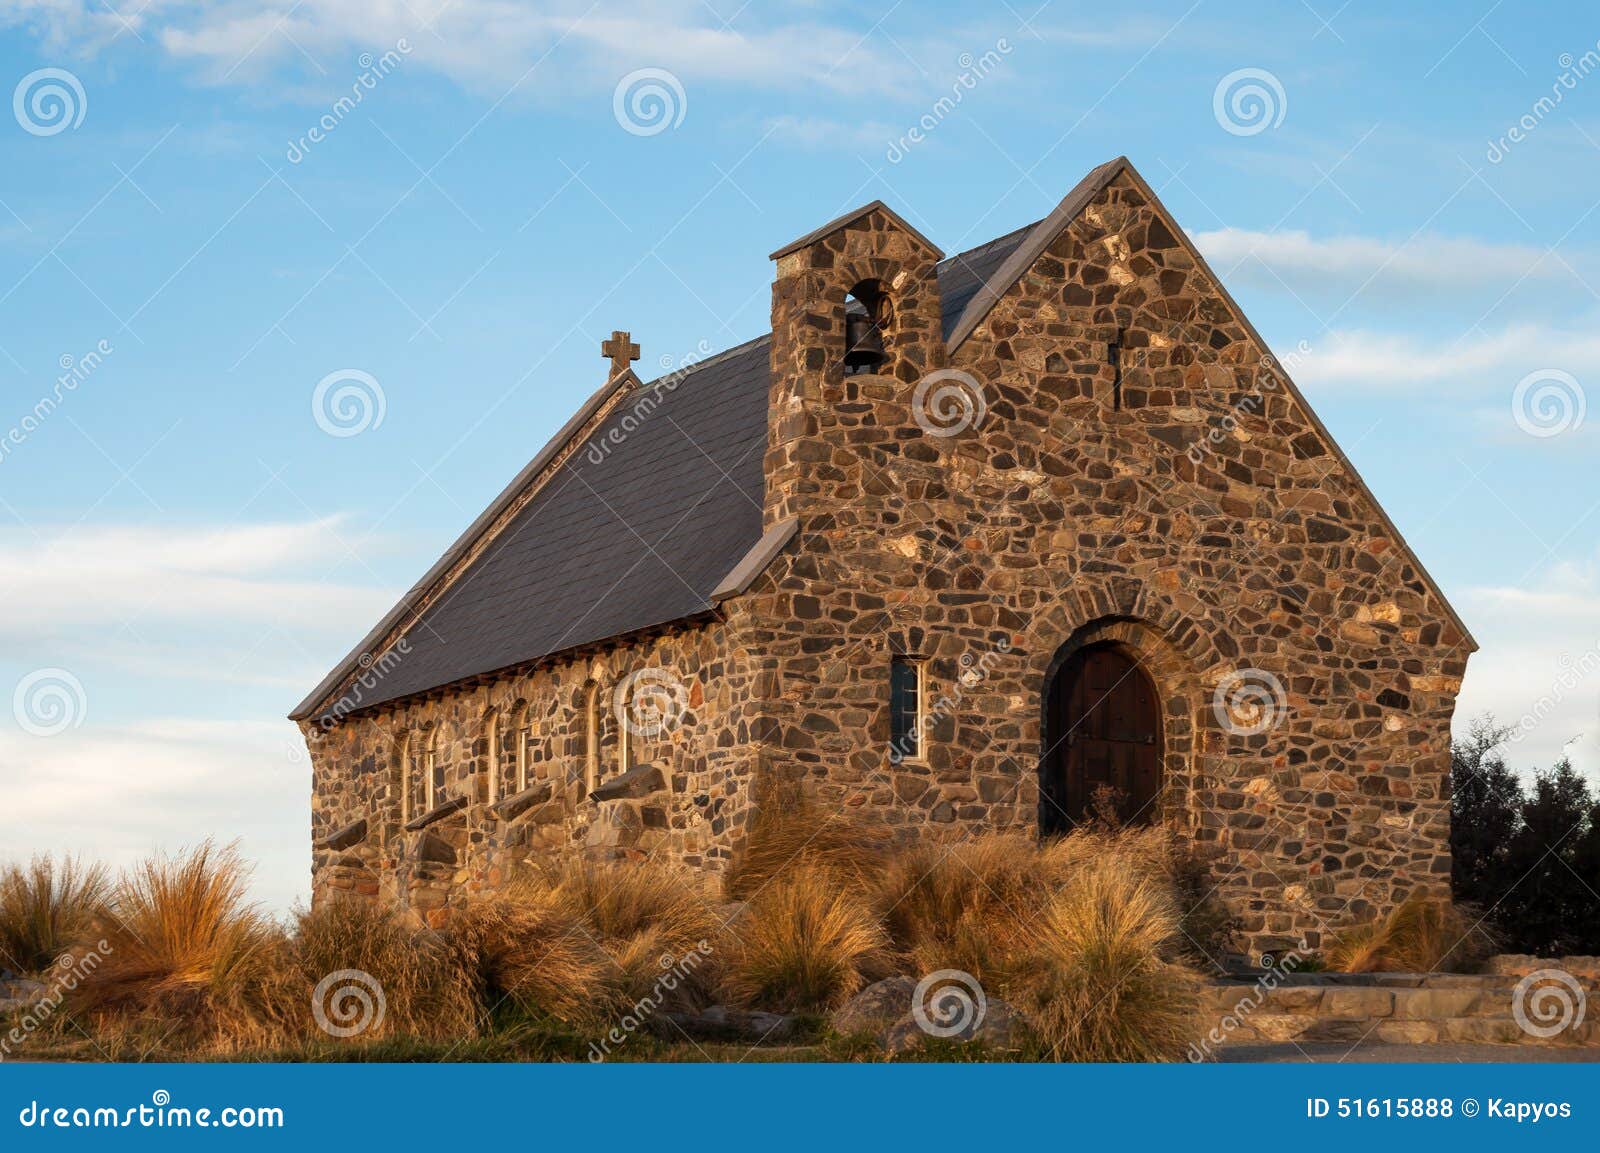 church of the good shepherd at lake tekapo